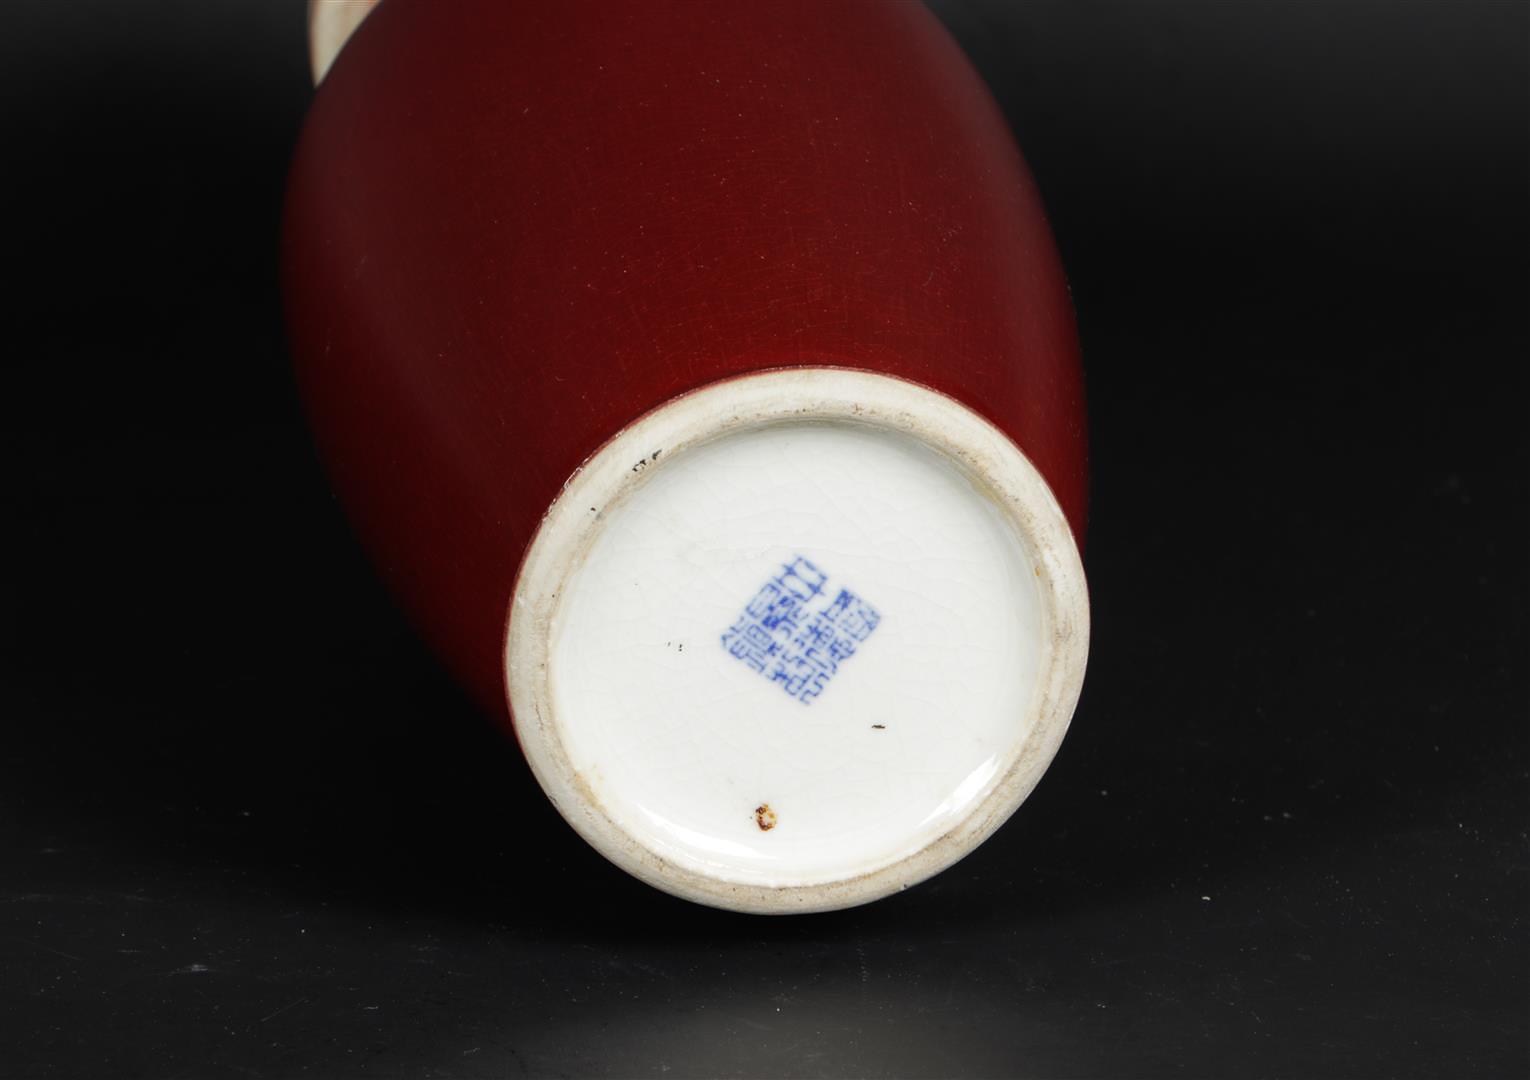 A porcelain Sang de boeuf vase, marked on the bottom. China, 20th century. - Image 2 of 2